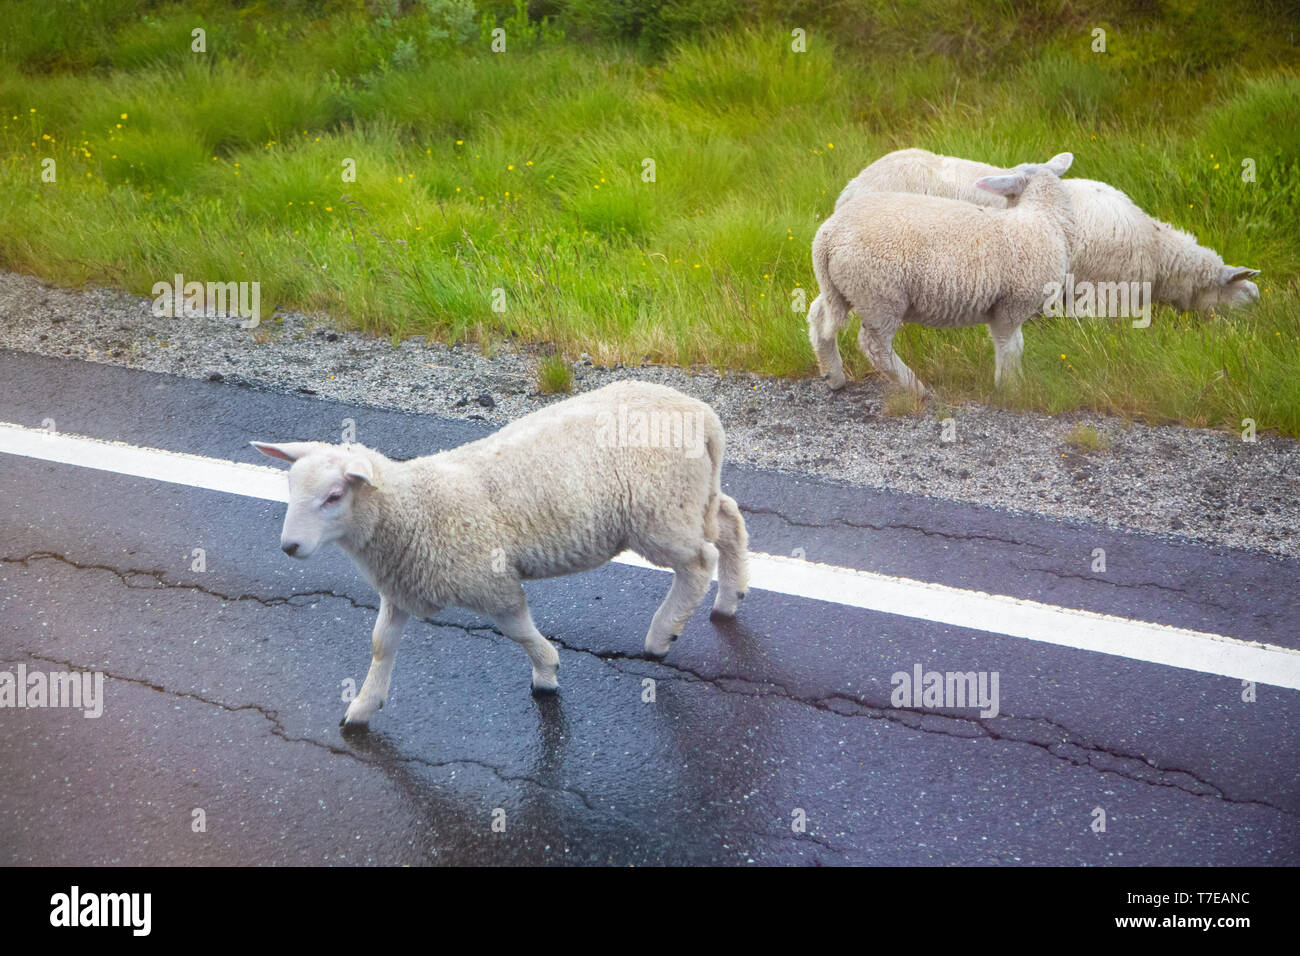 Sheep crossing an asphalt road, close-up Stock Photo